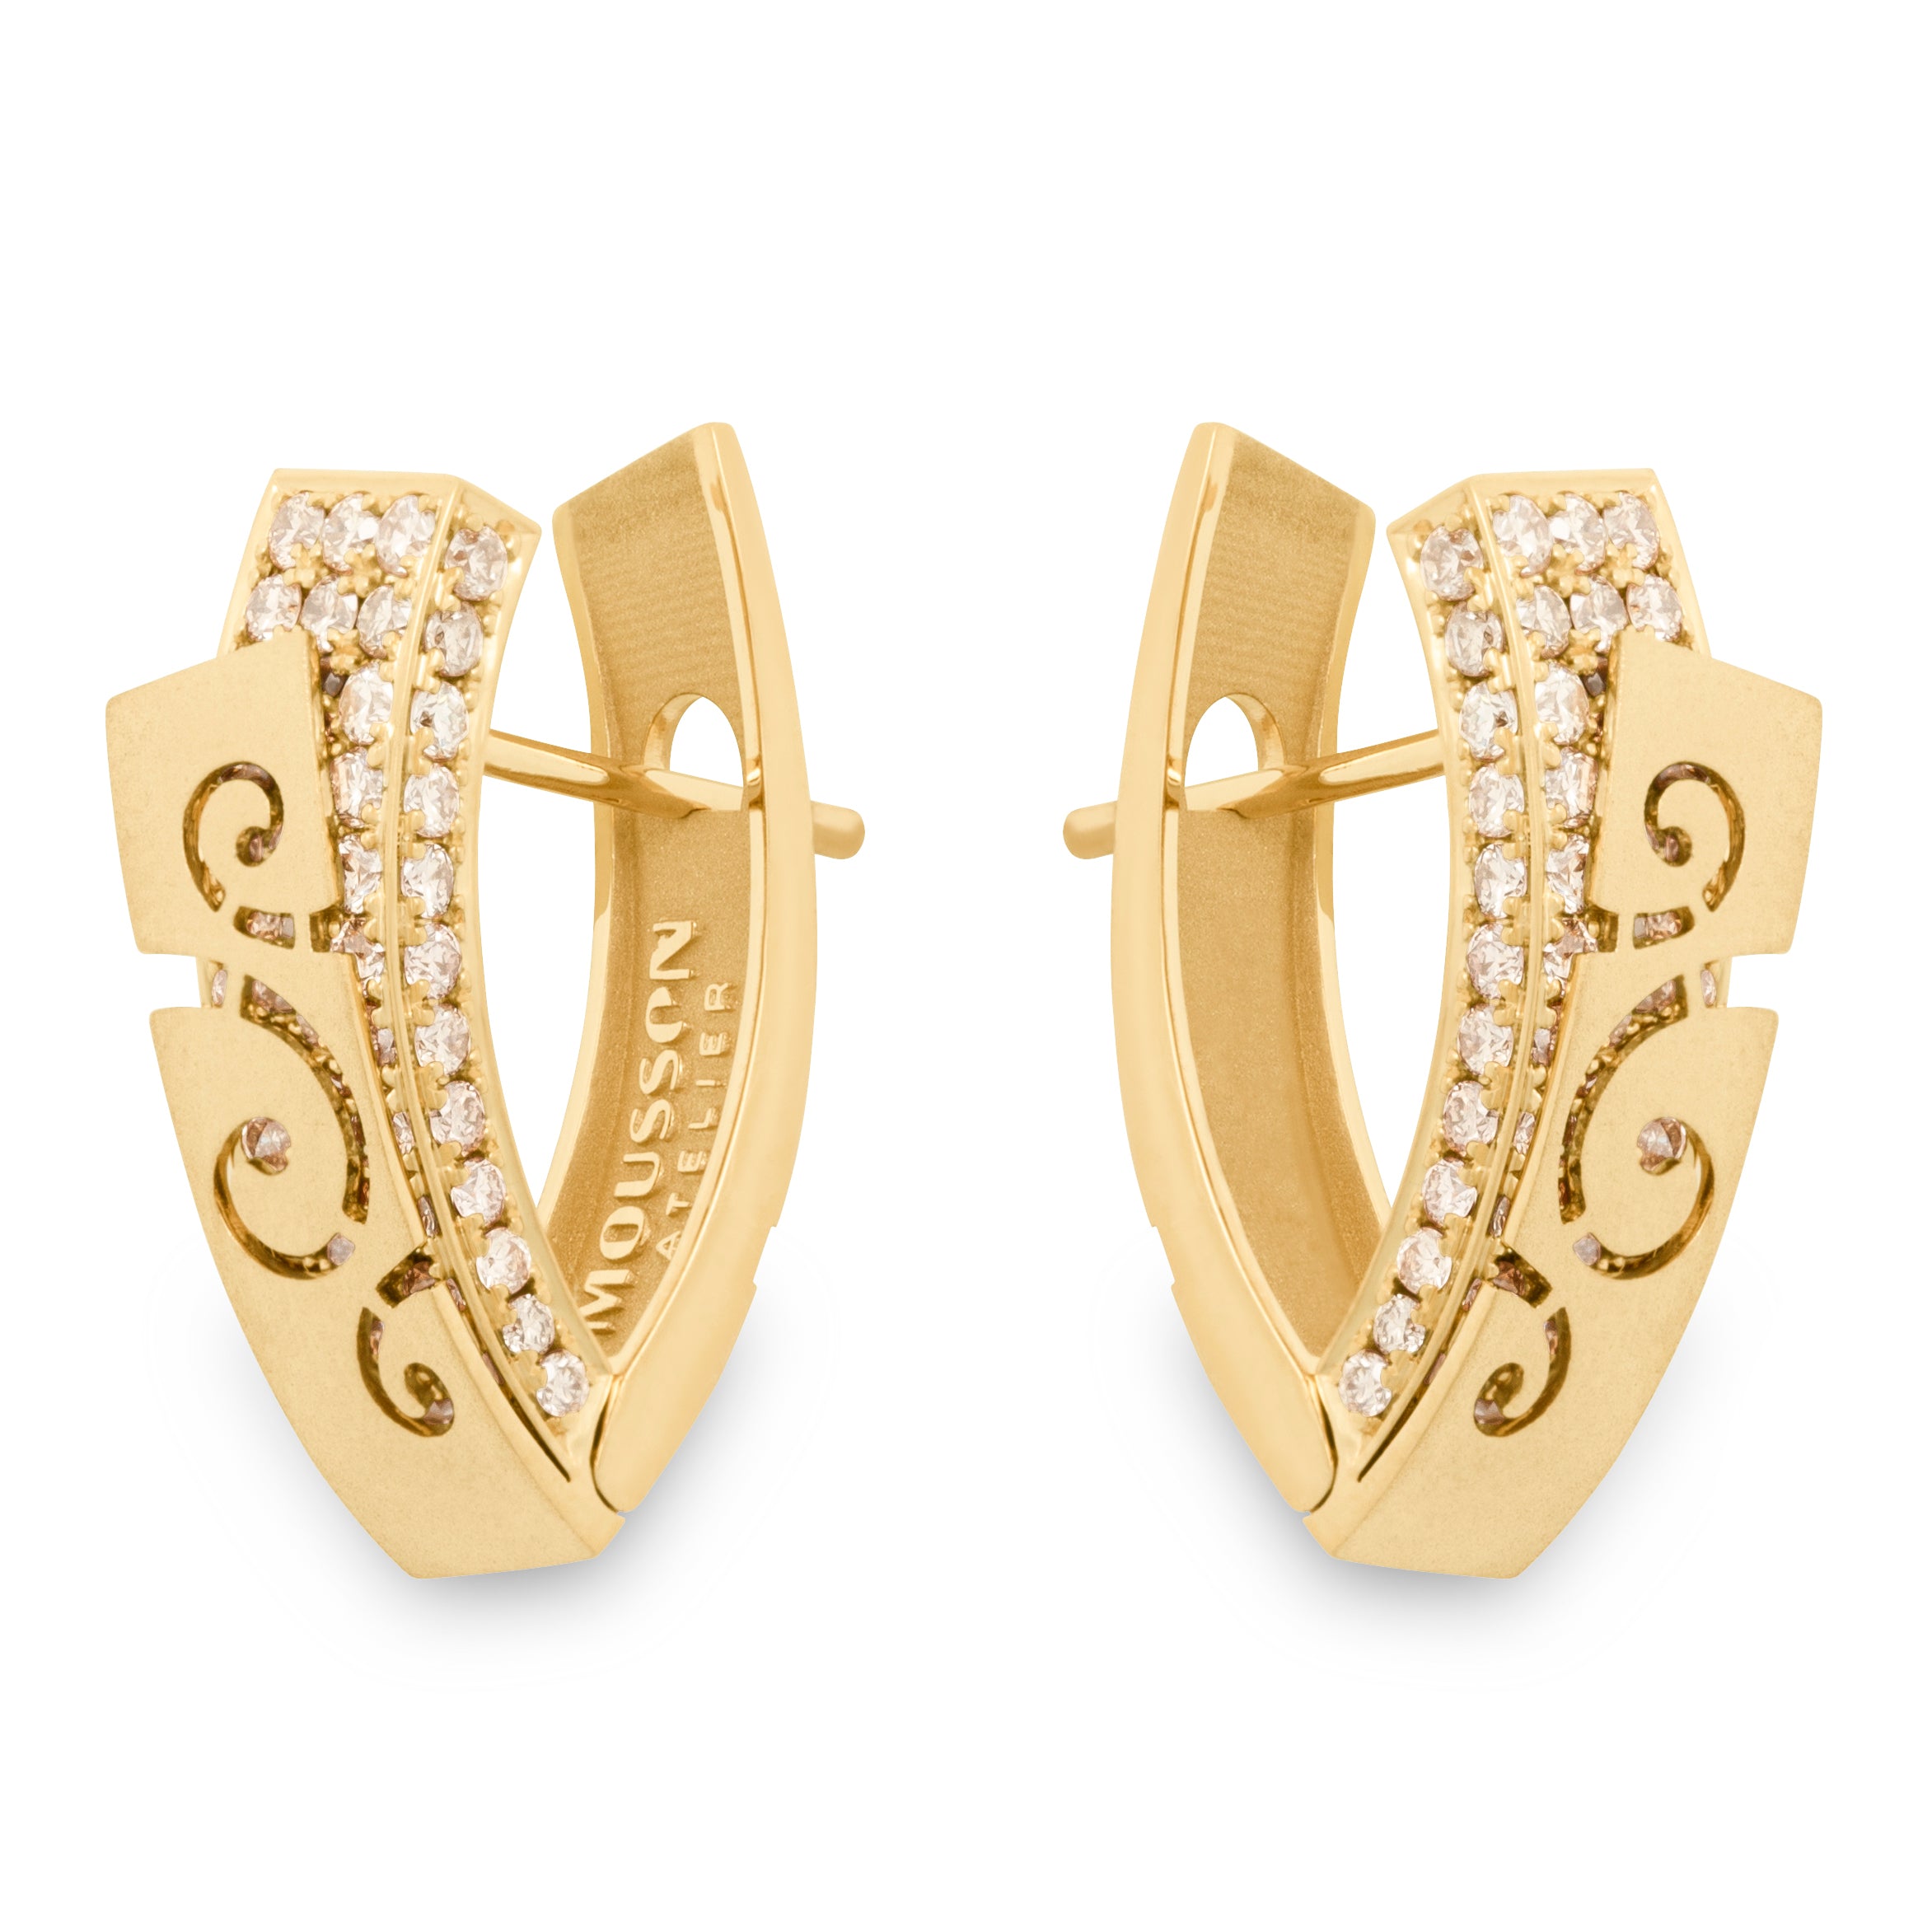 E 0003-1, 18K Yellow Gold, Champagne Diamonds Earrings